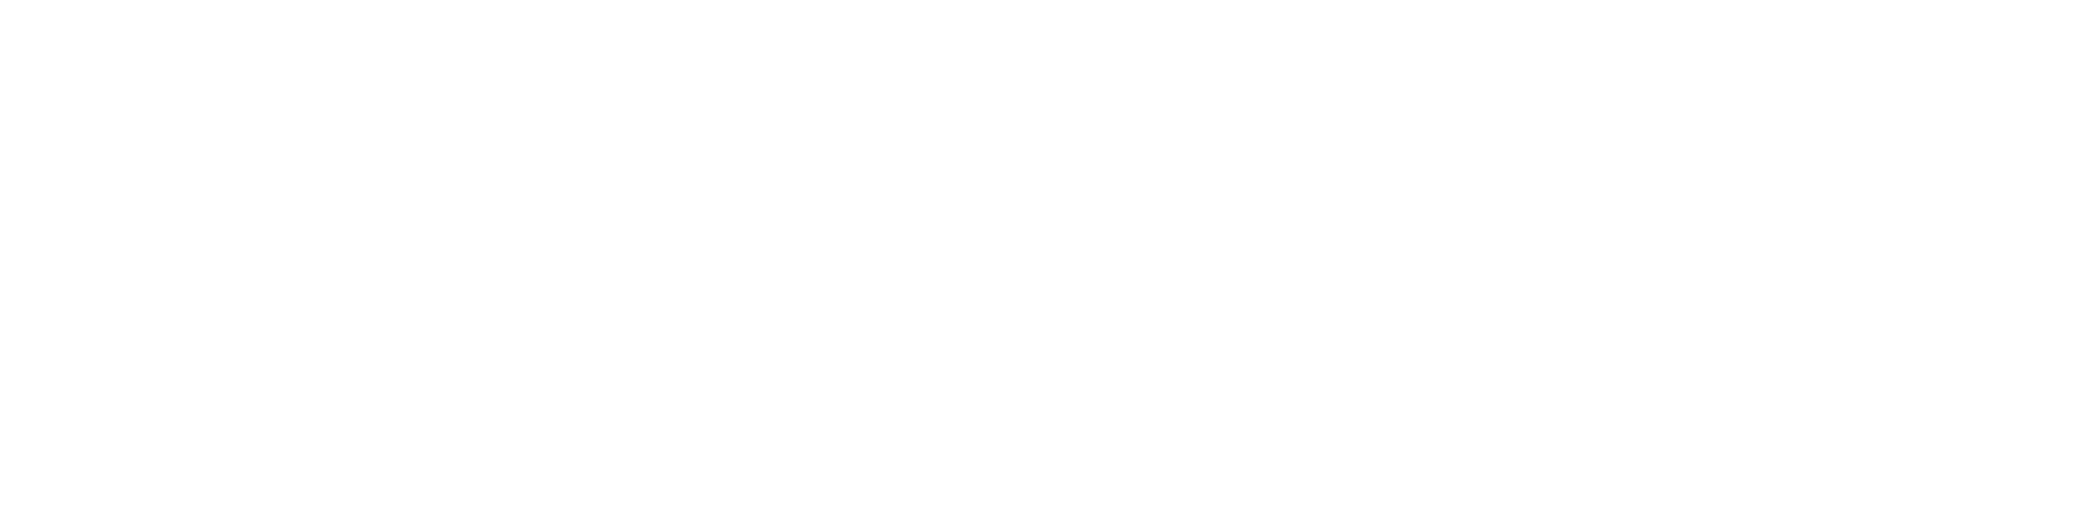 SkillsMatter-logo-2020-braces-RGB-wht